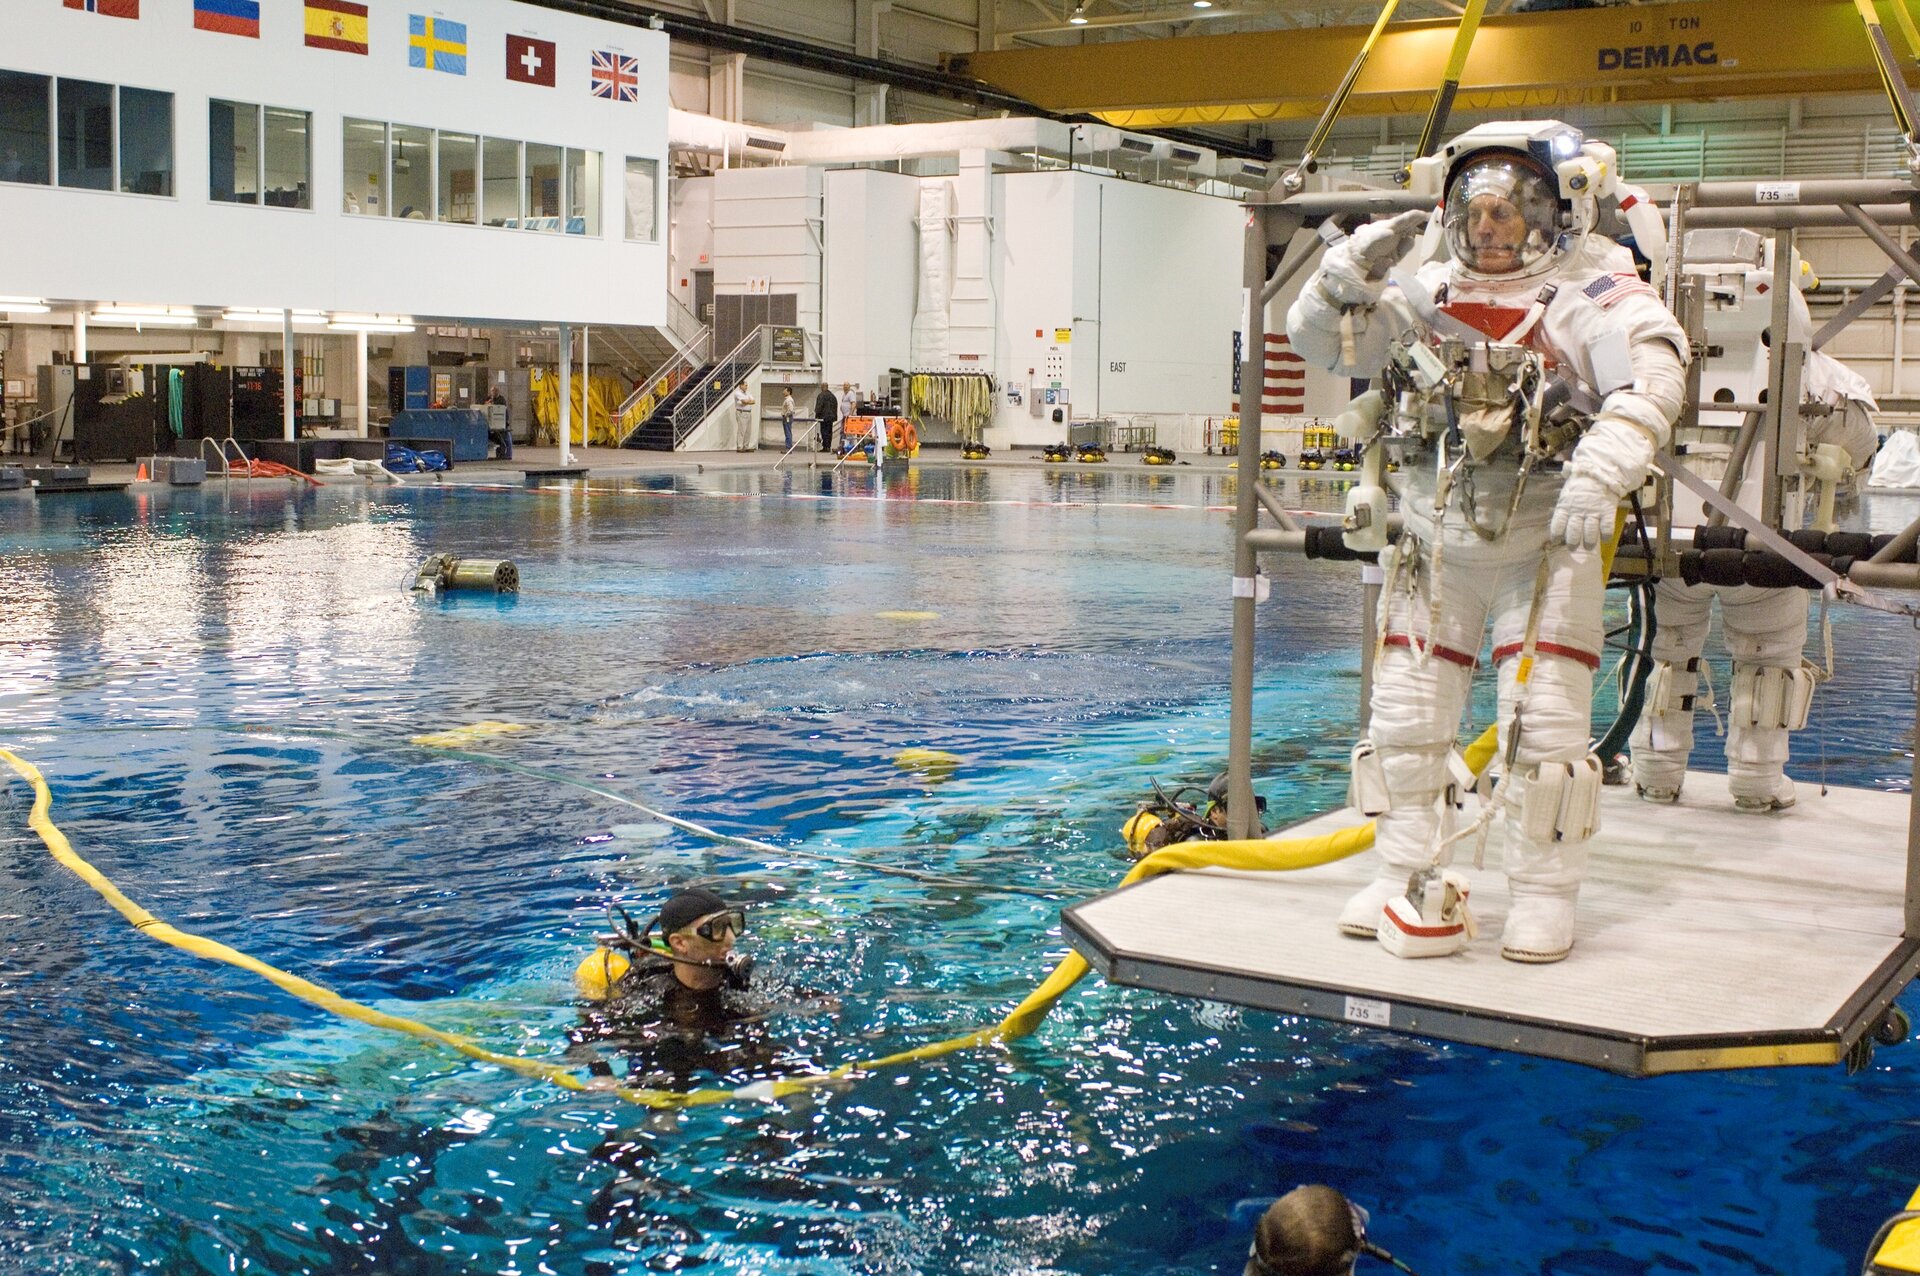 NASA's Neutral Buoyancy Laboratory in Houston